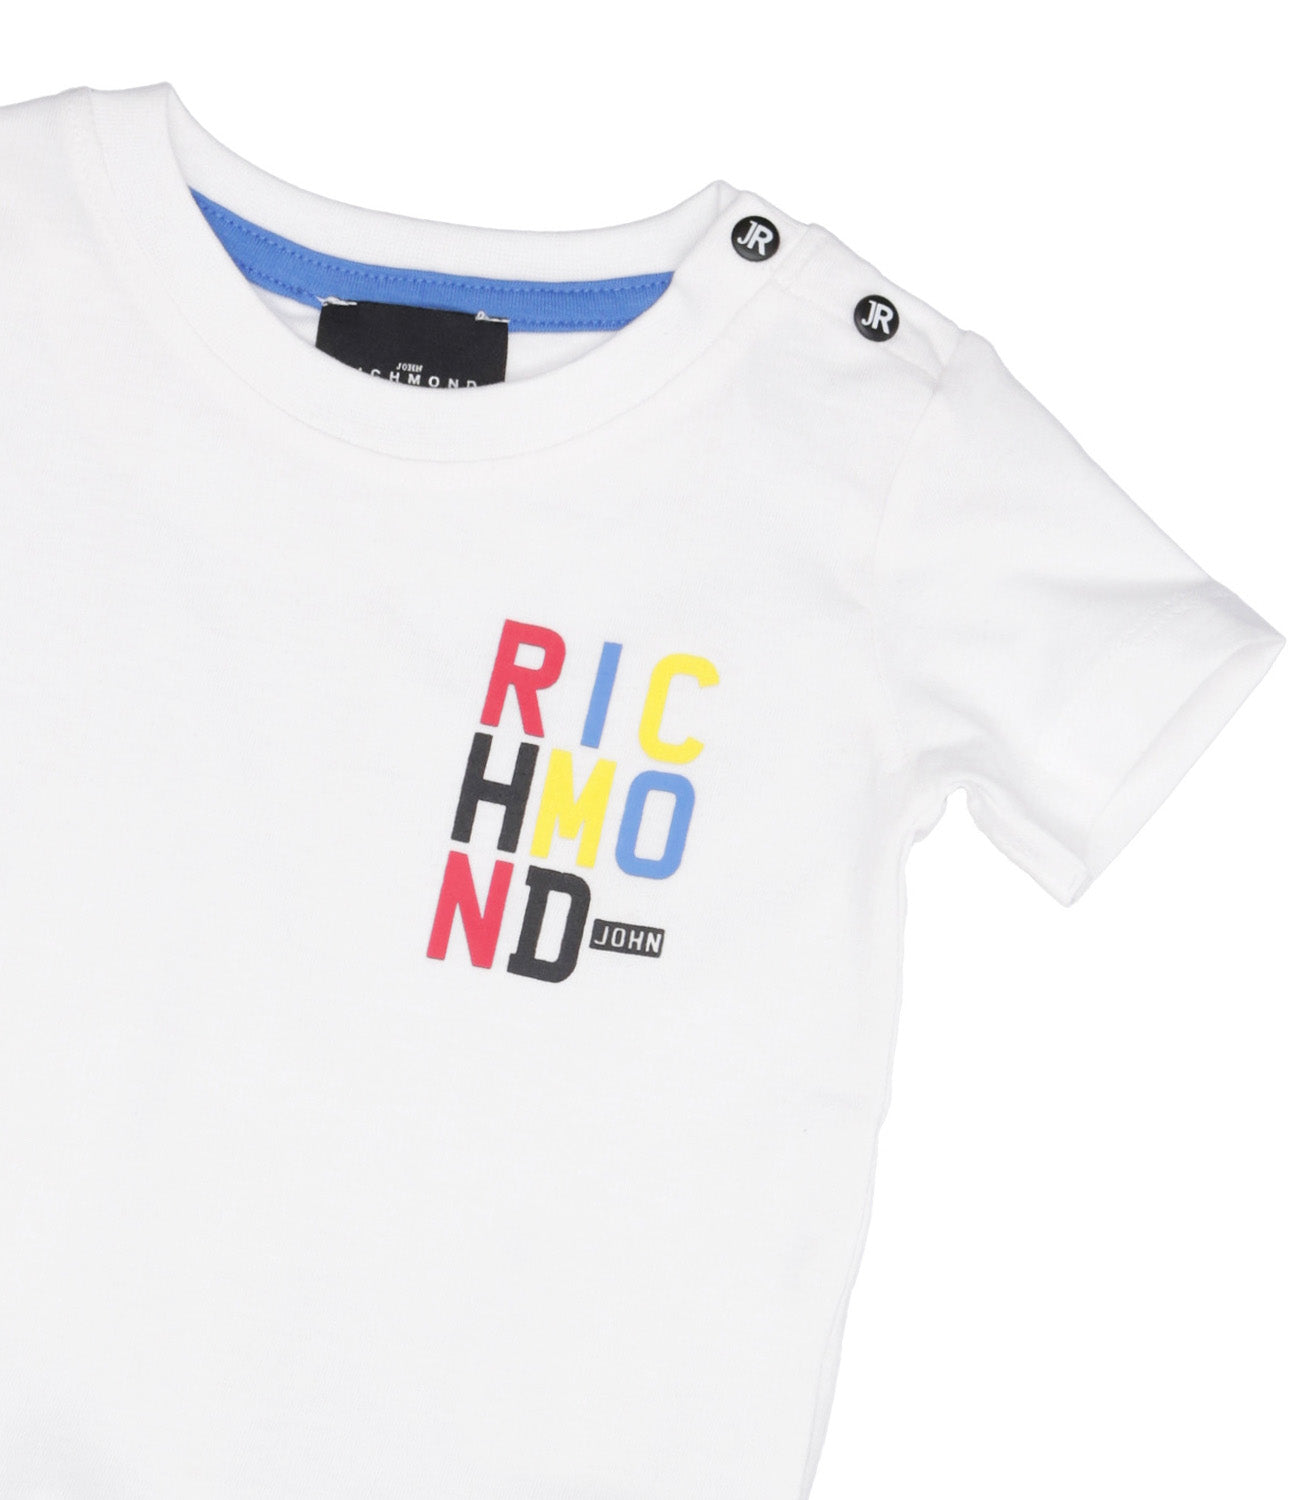 Richmond Kids | Blue and White T-Shirt and Bermuda Shorts Set